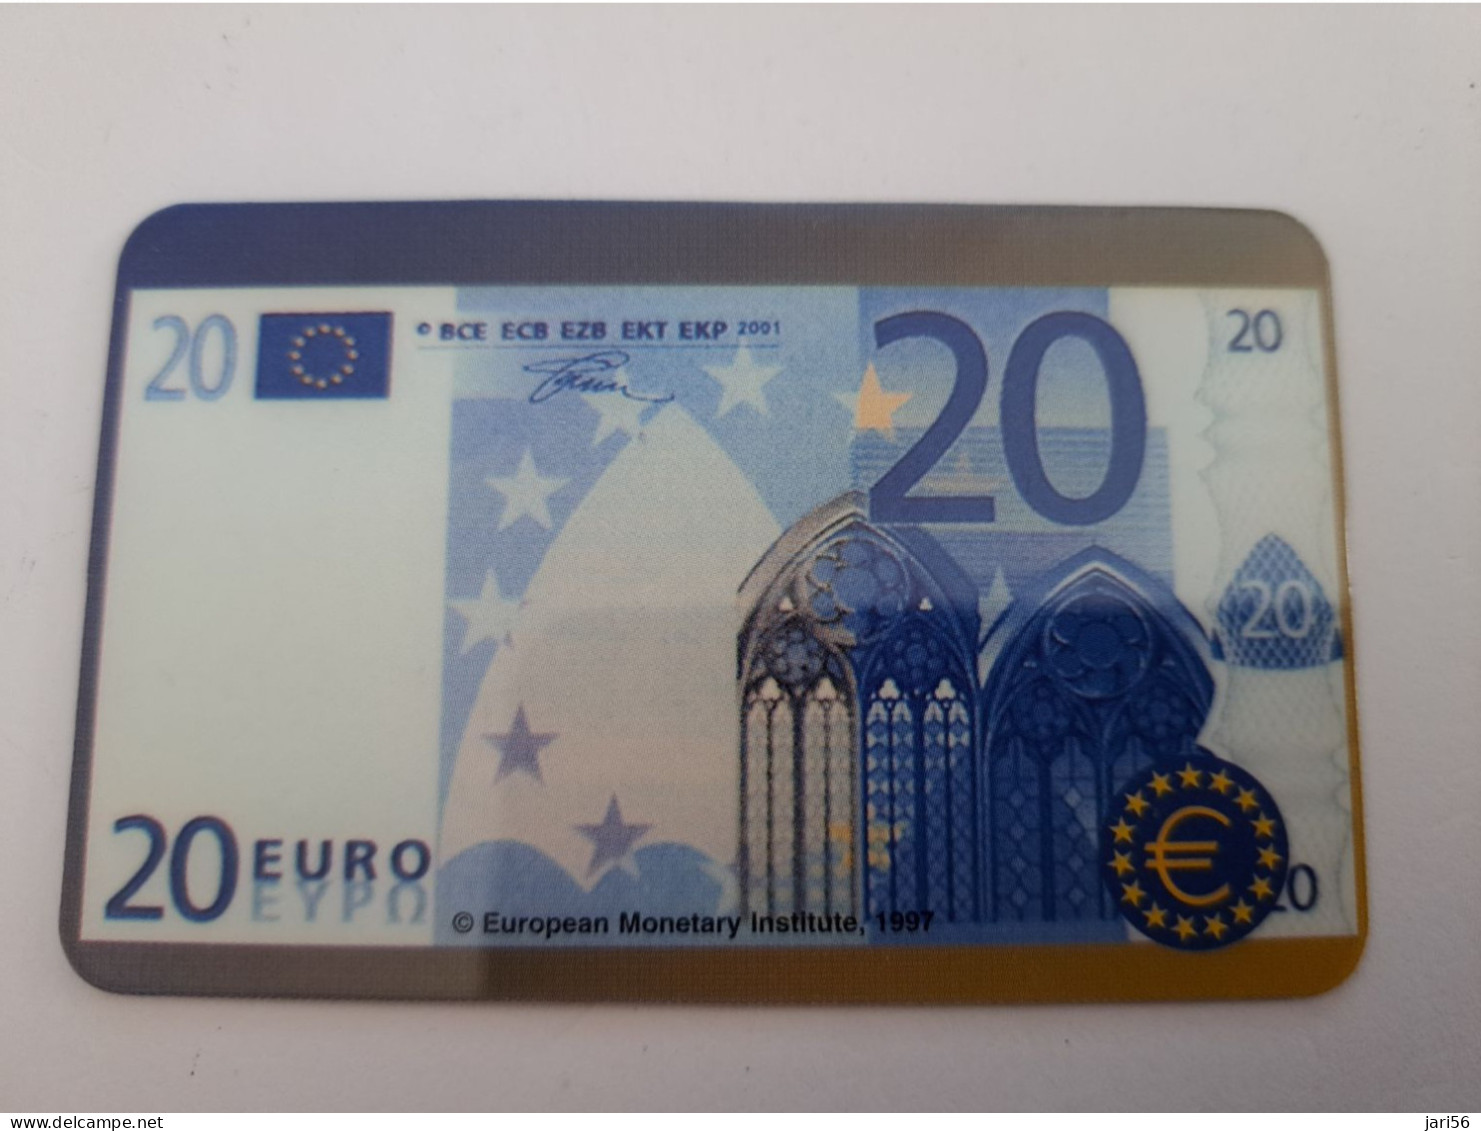 GREAT BRITAIN   20 UNITS   / EURO COINS/ BILJET 20  EURO    (date NOVEMBER 1998)  PREPAID CARD / MINT      **14832** - Collezioni